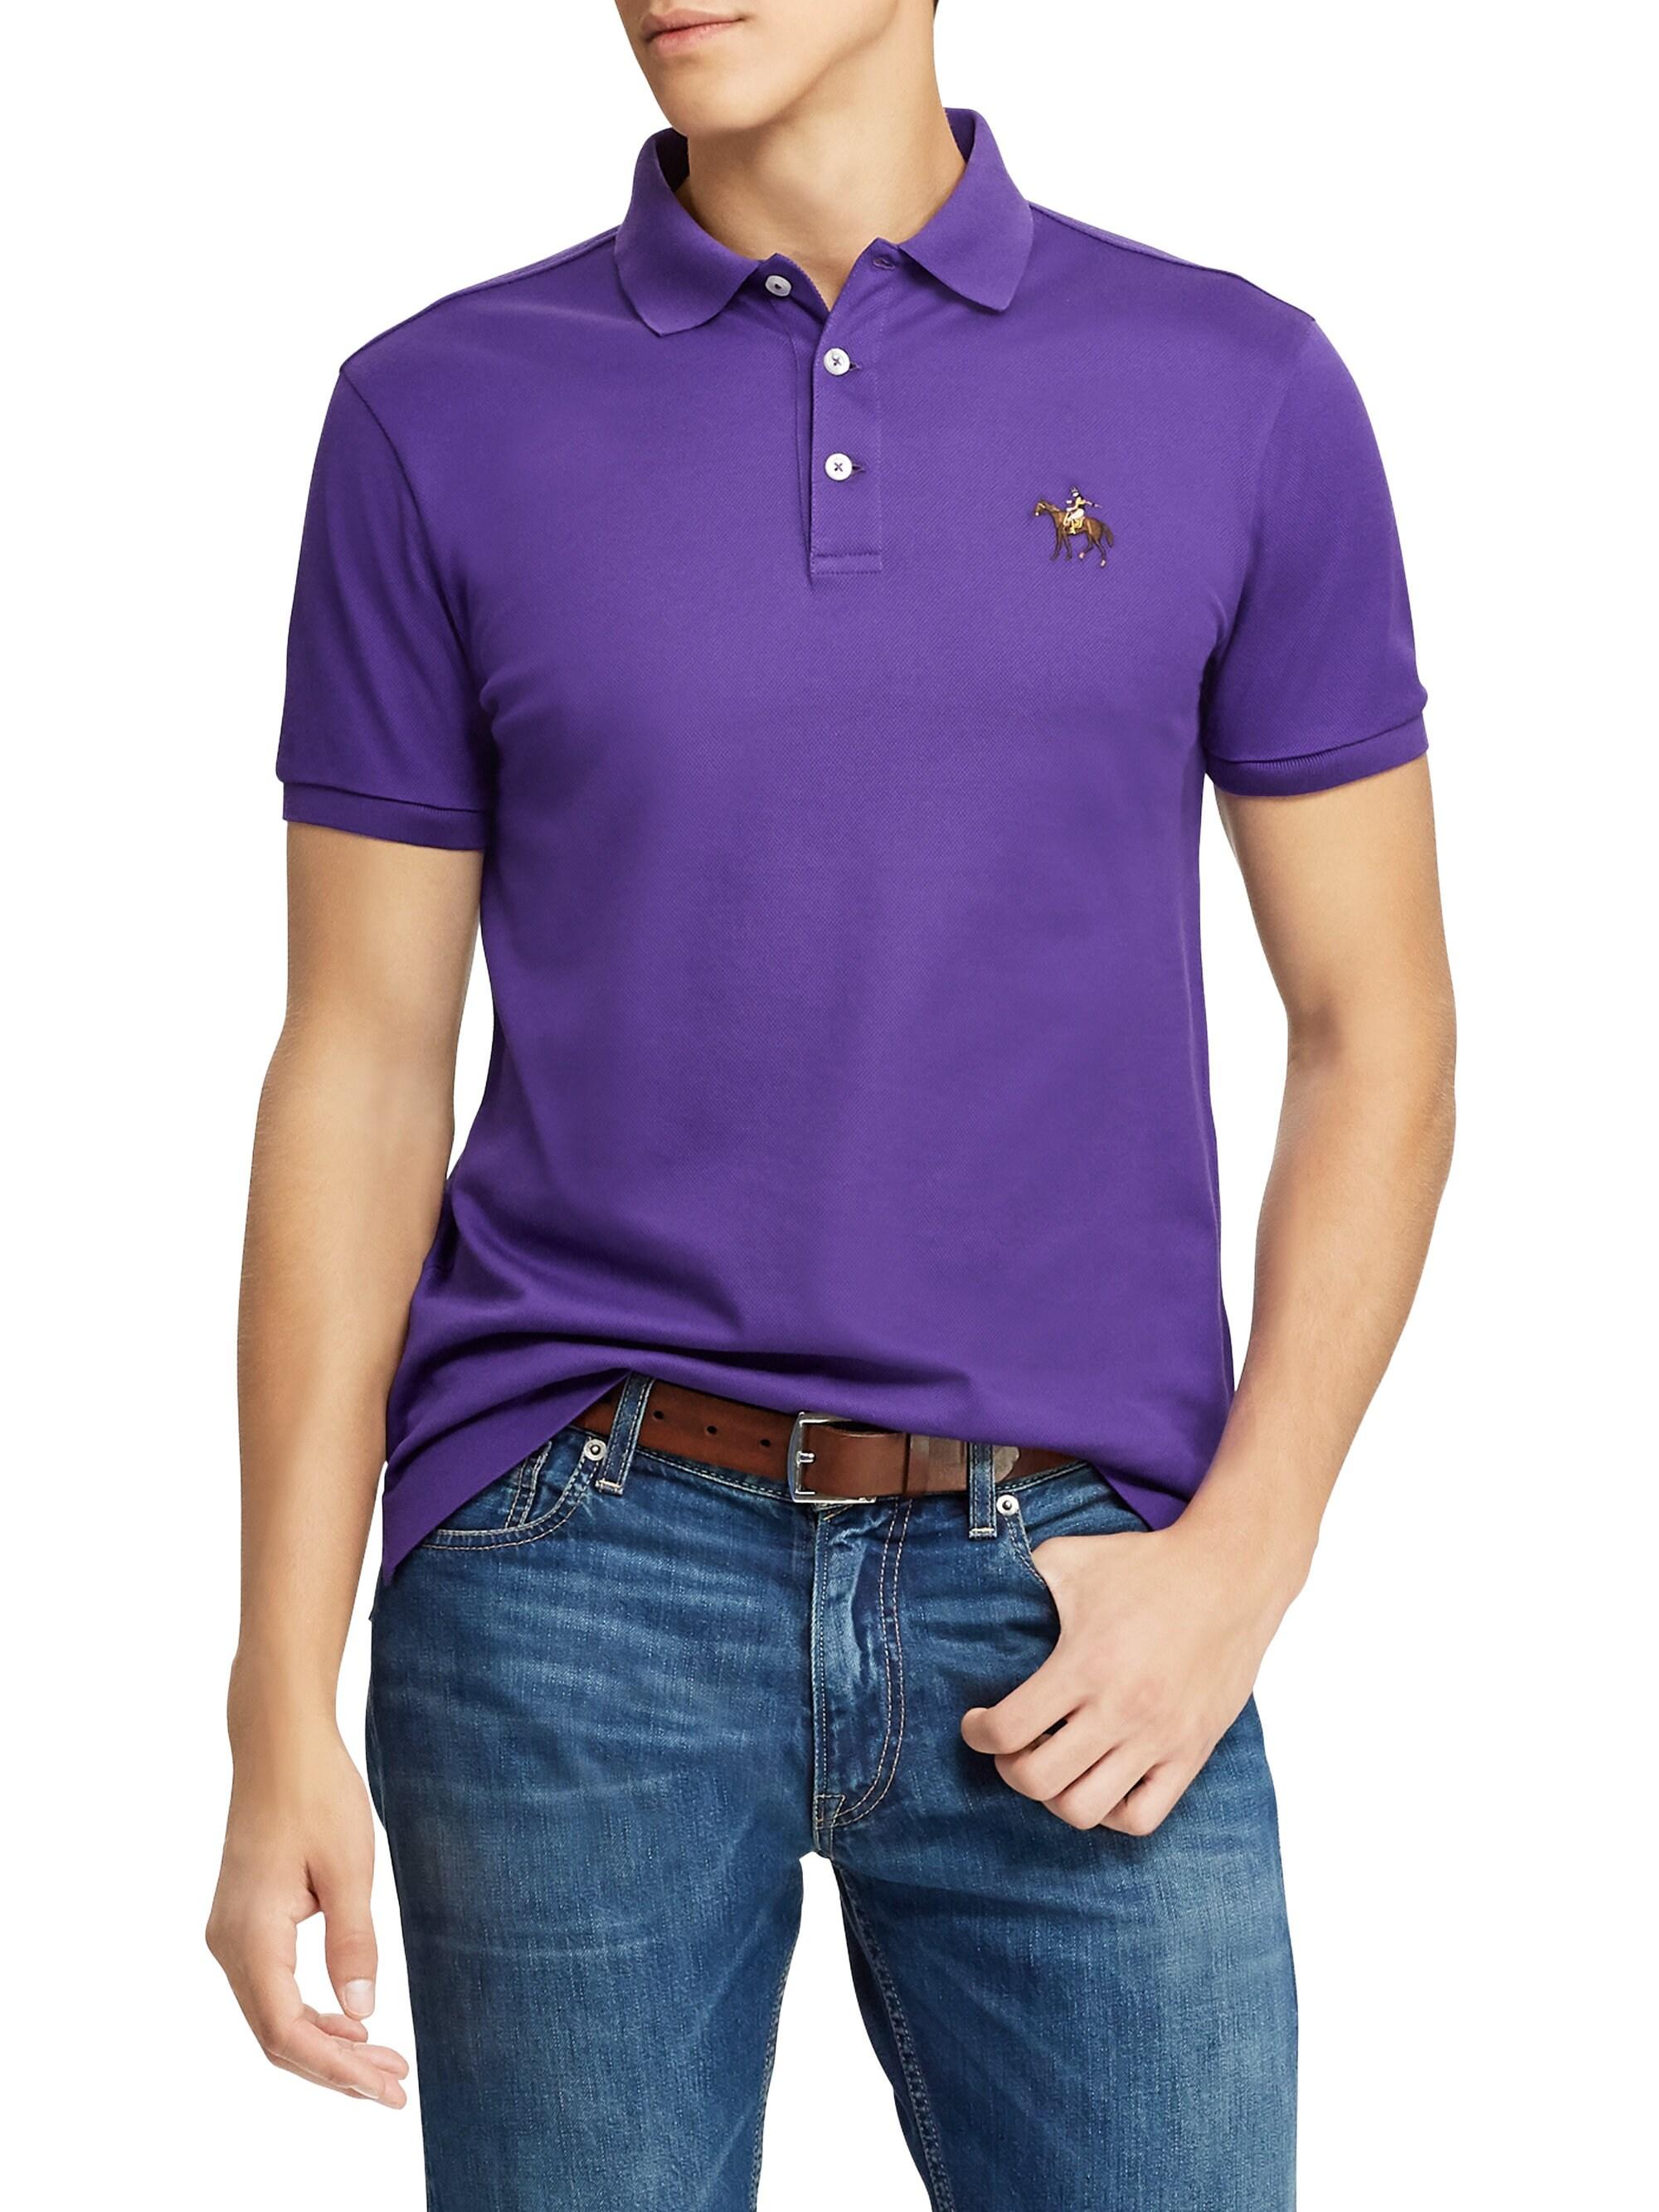 Ralph Lauren Purple Label Logo Cotton Polo Shirt in Purple for Men - Lyst